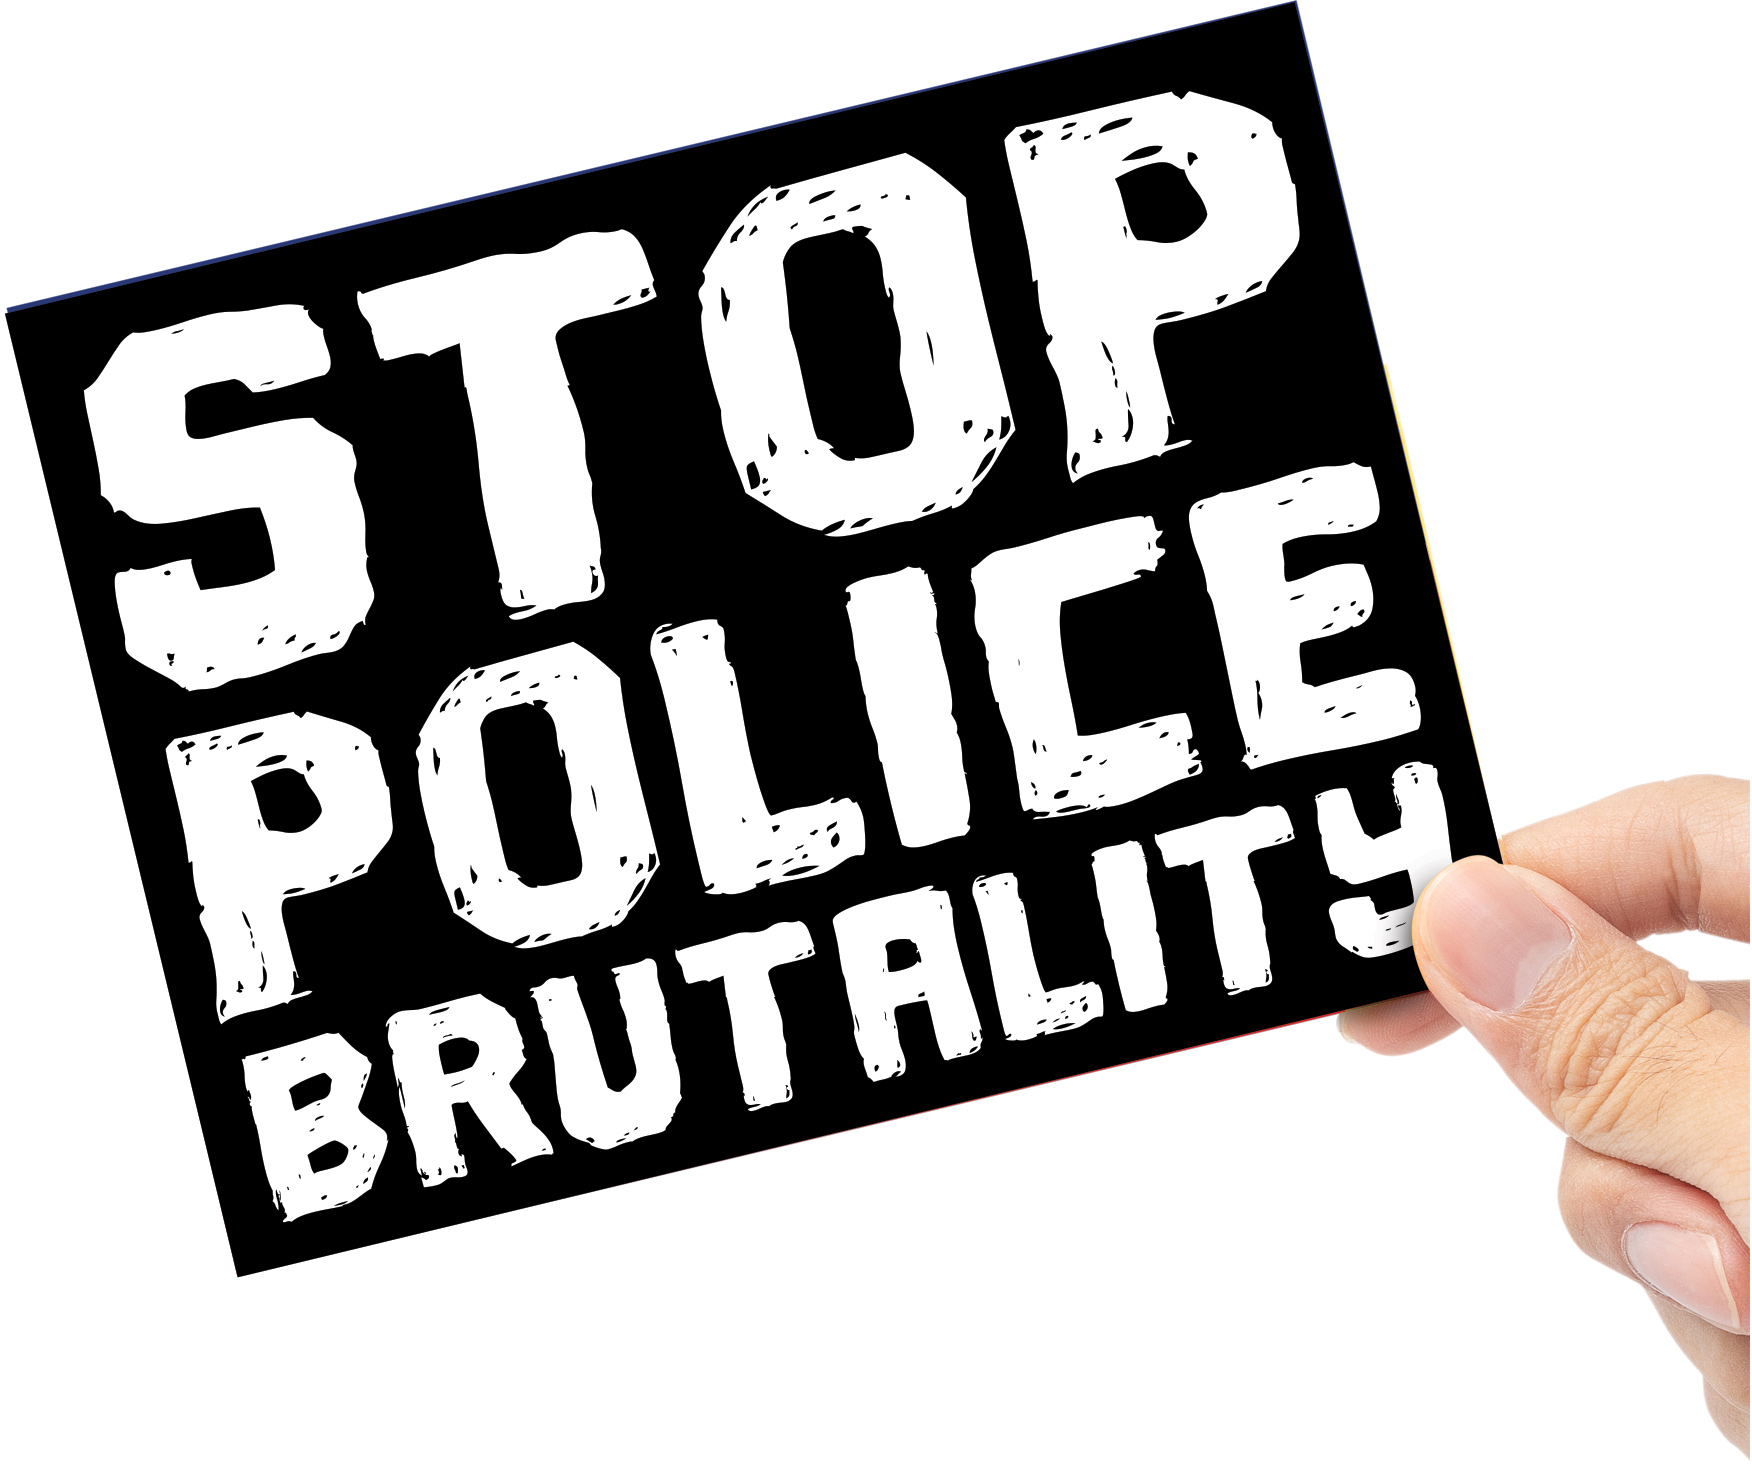 Stop Police Brutality Vinyl Sticker - 6 x 4.5 inch